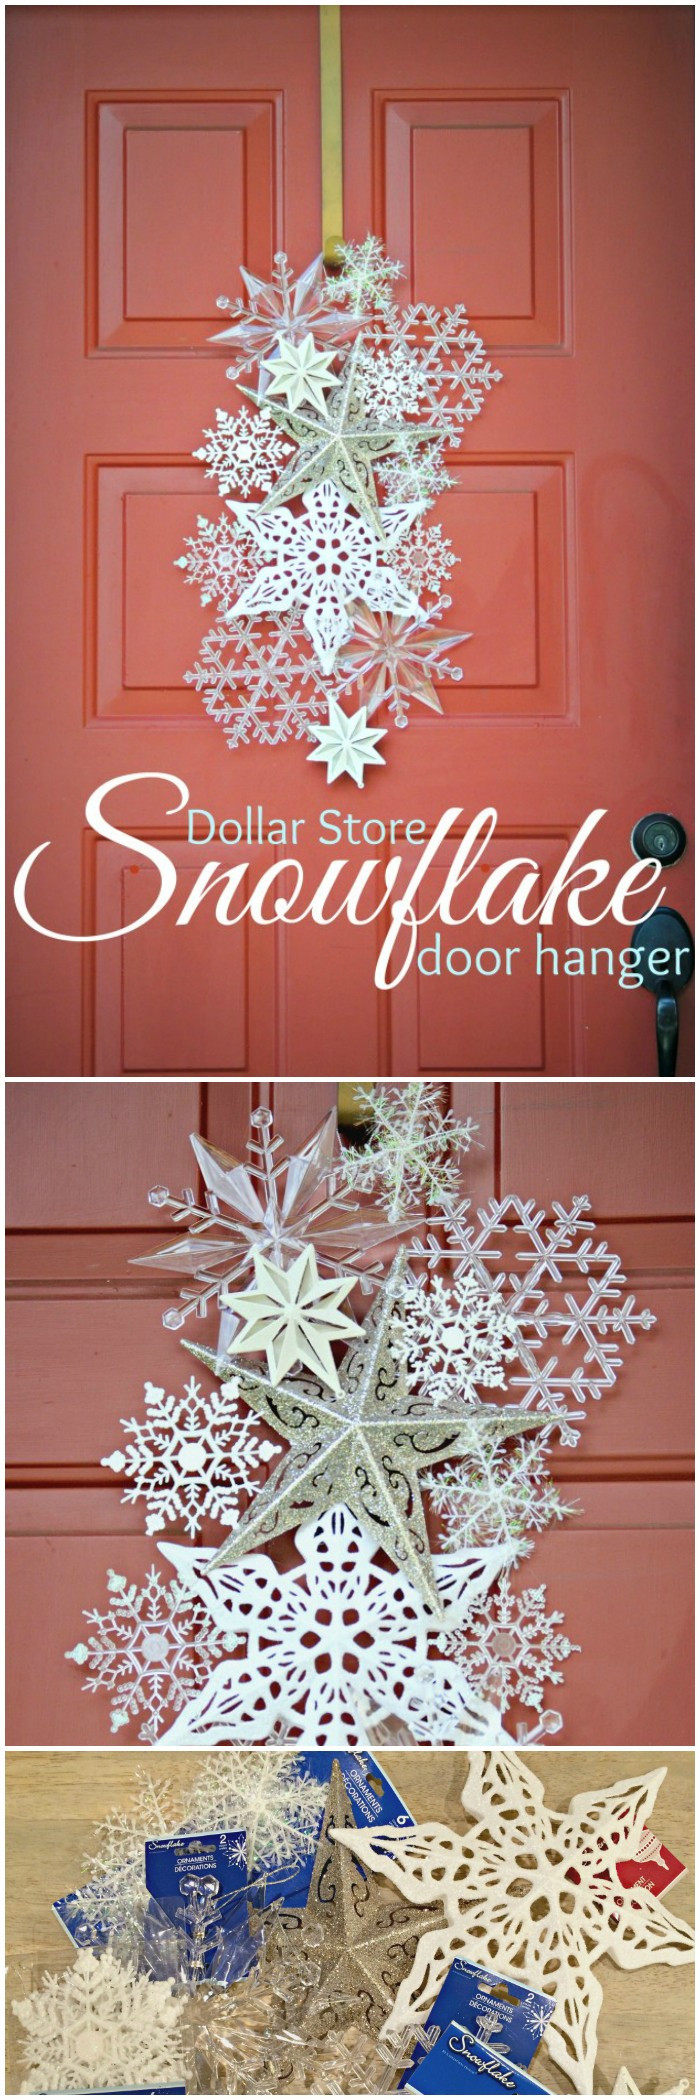 DIY Hanging Decorations
 16 Bud Friendly DIY Christmas Door Decorations • DIY